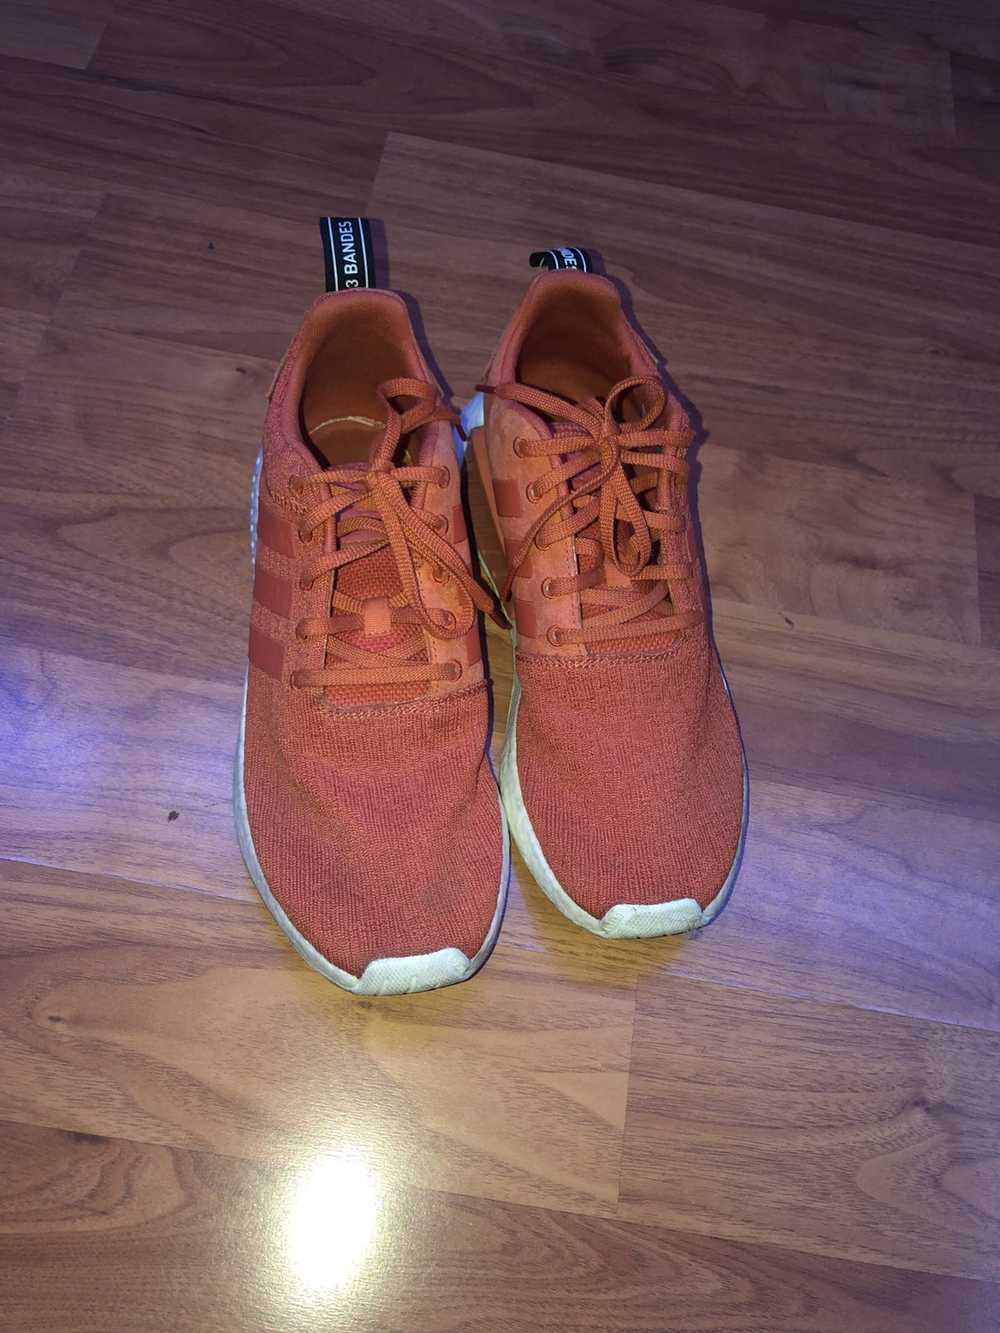 Adidas NMD R2 Summer Spice Size 13 Orange Black CQ3081 Men’s Athletic Shoes  